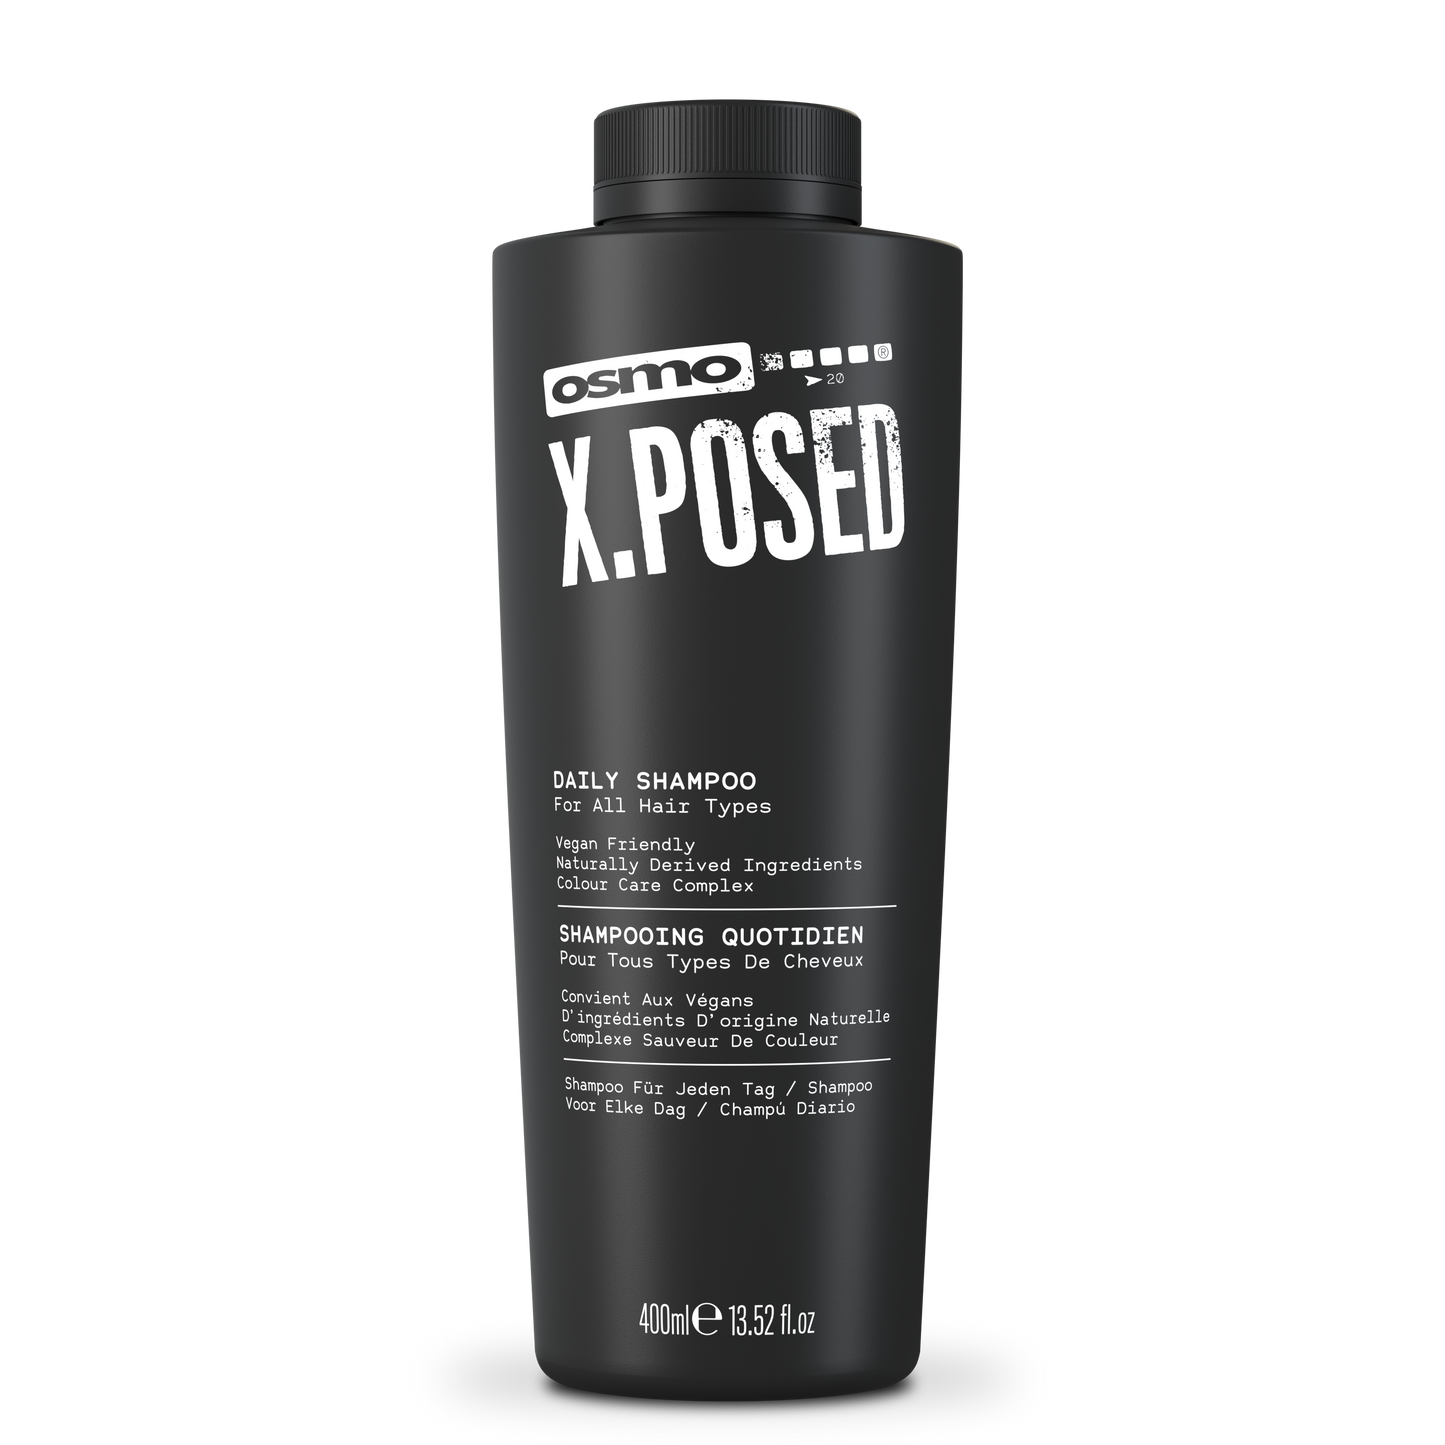 Osmo X.posed Daily Shampoo